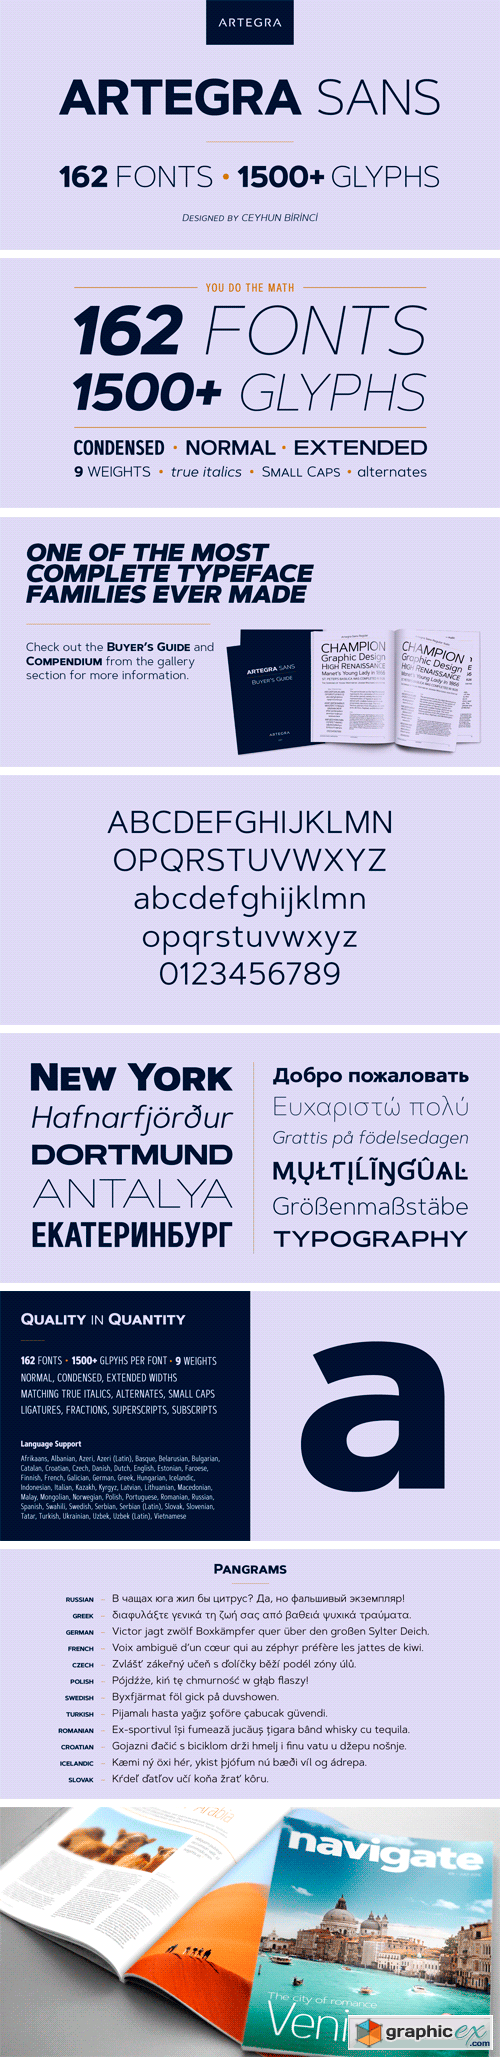 Artegra Sans Font Family